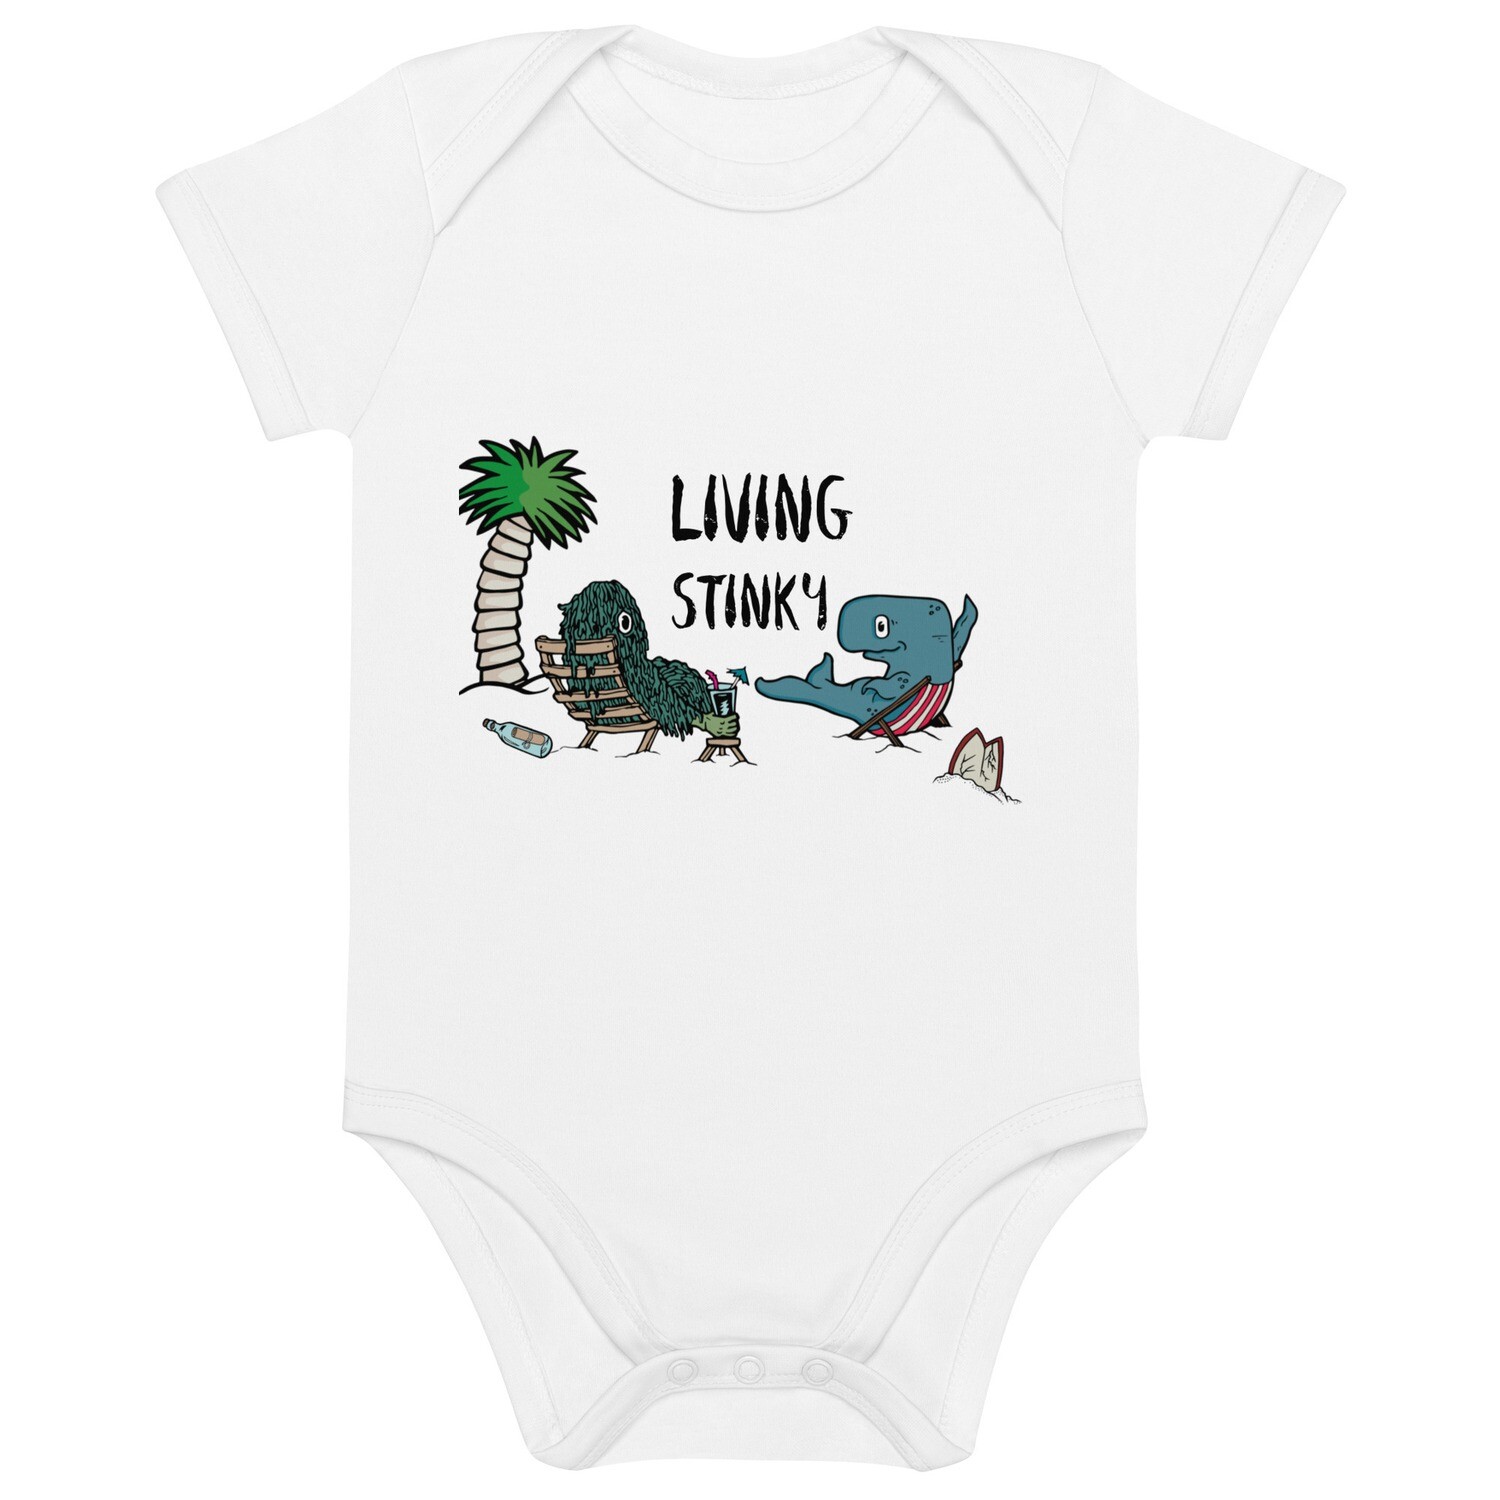 Living Stinky Organic cotton baby bodysuit